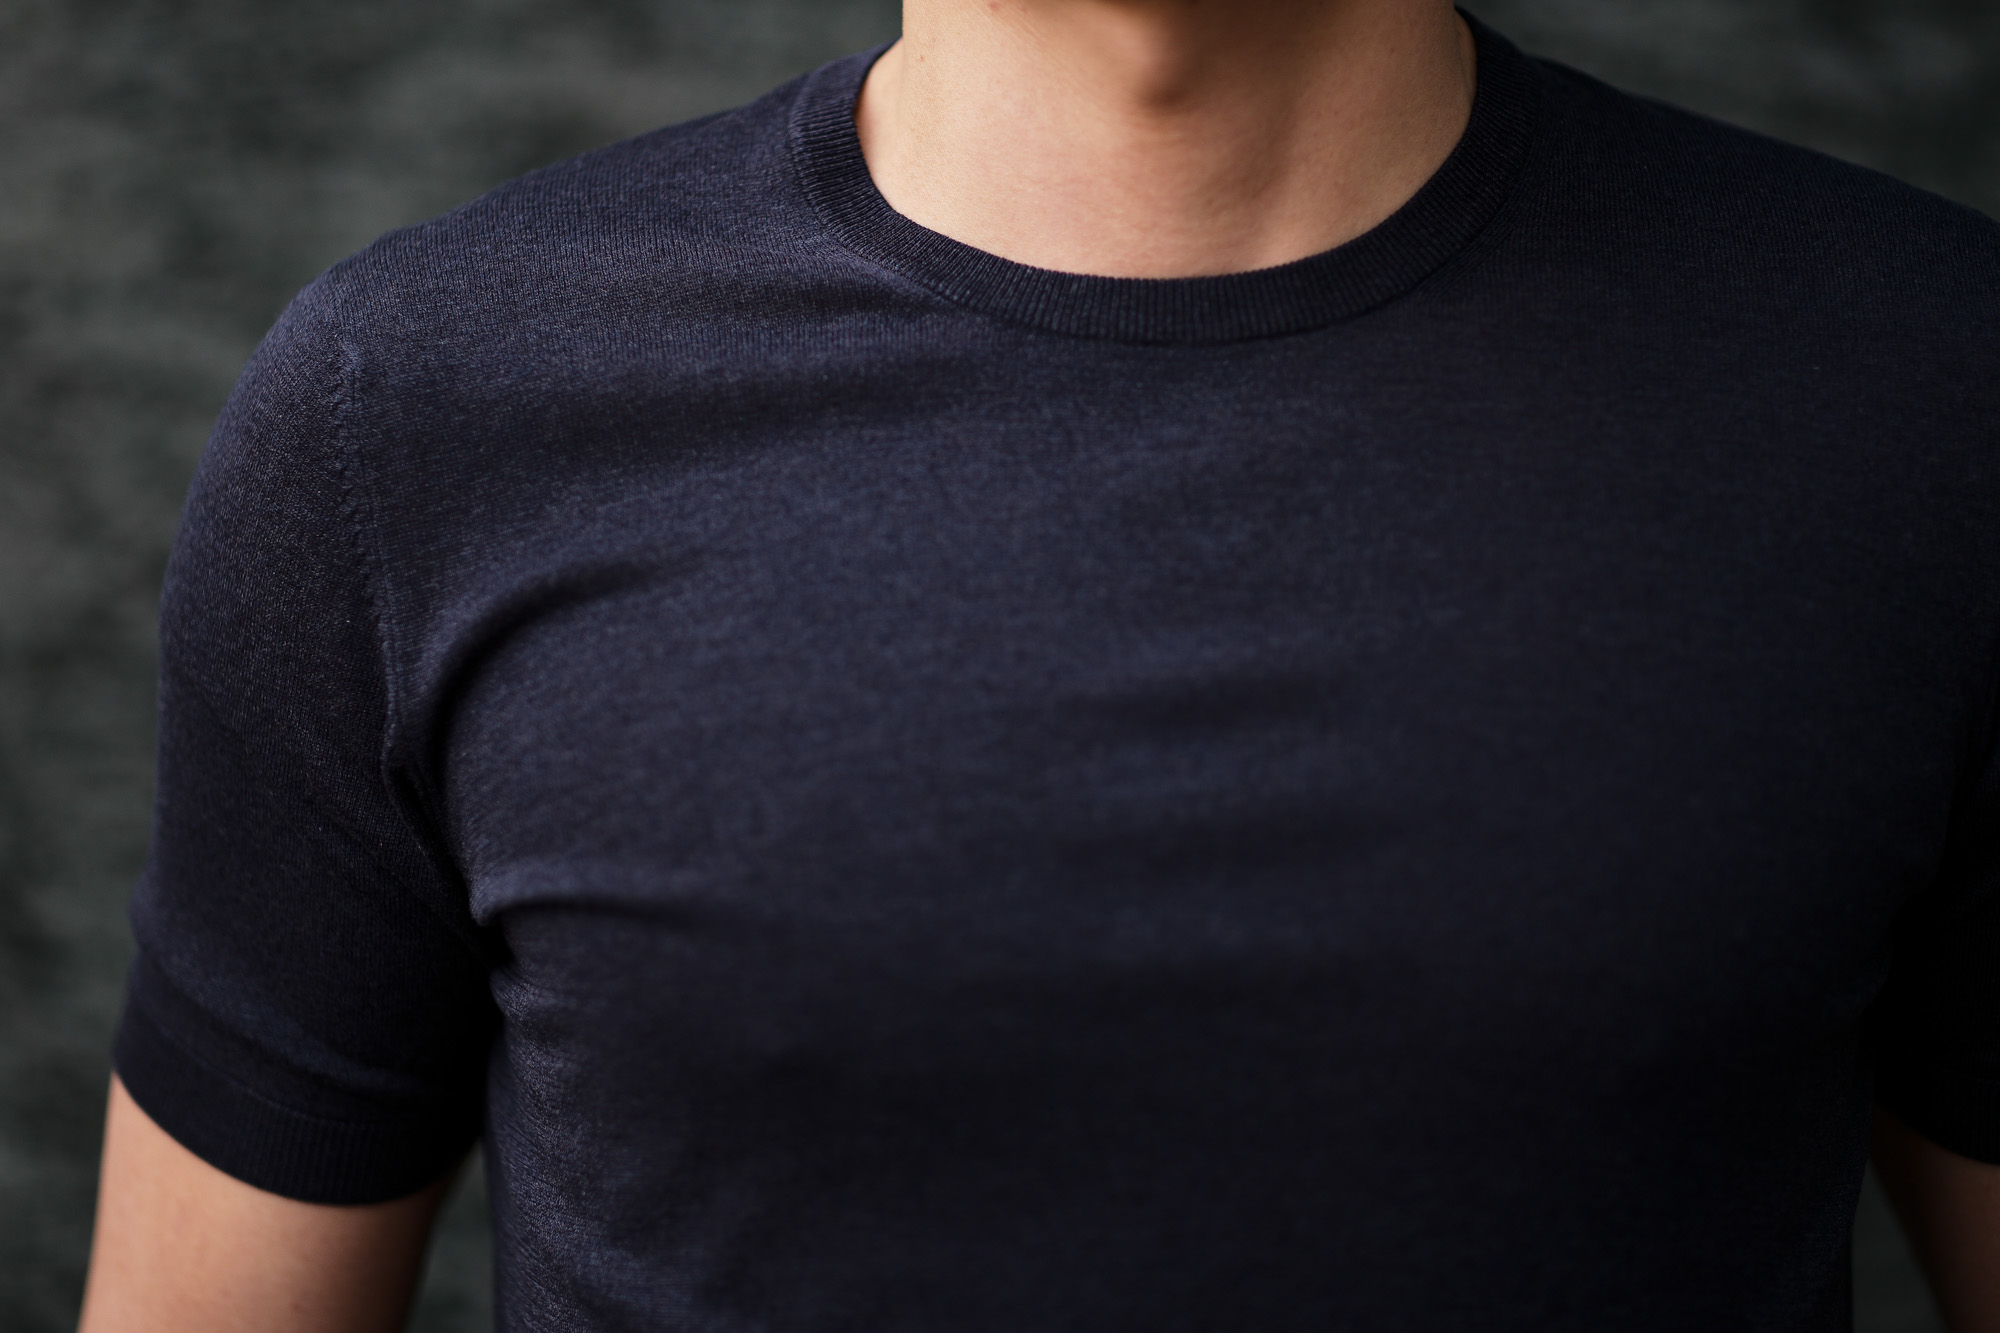 Gran Sasso (グランサッソ) Silk Knit T-shirt (シルクニット Tシャツ) SETA (シルク 100%) ショートスリーブ シルク ニット Tシャツ NAVY (ネイビー・597) made in italy (イタリア製) 2020 春夏新作  gransasso 愛知 名古屋 altoediritto アルトエデリット